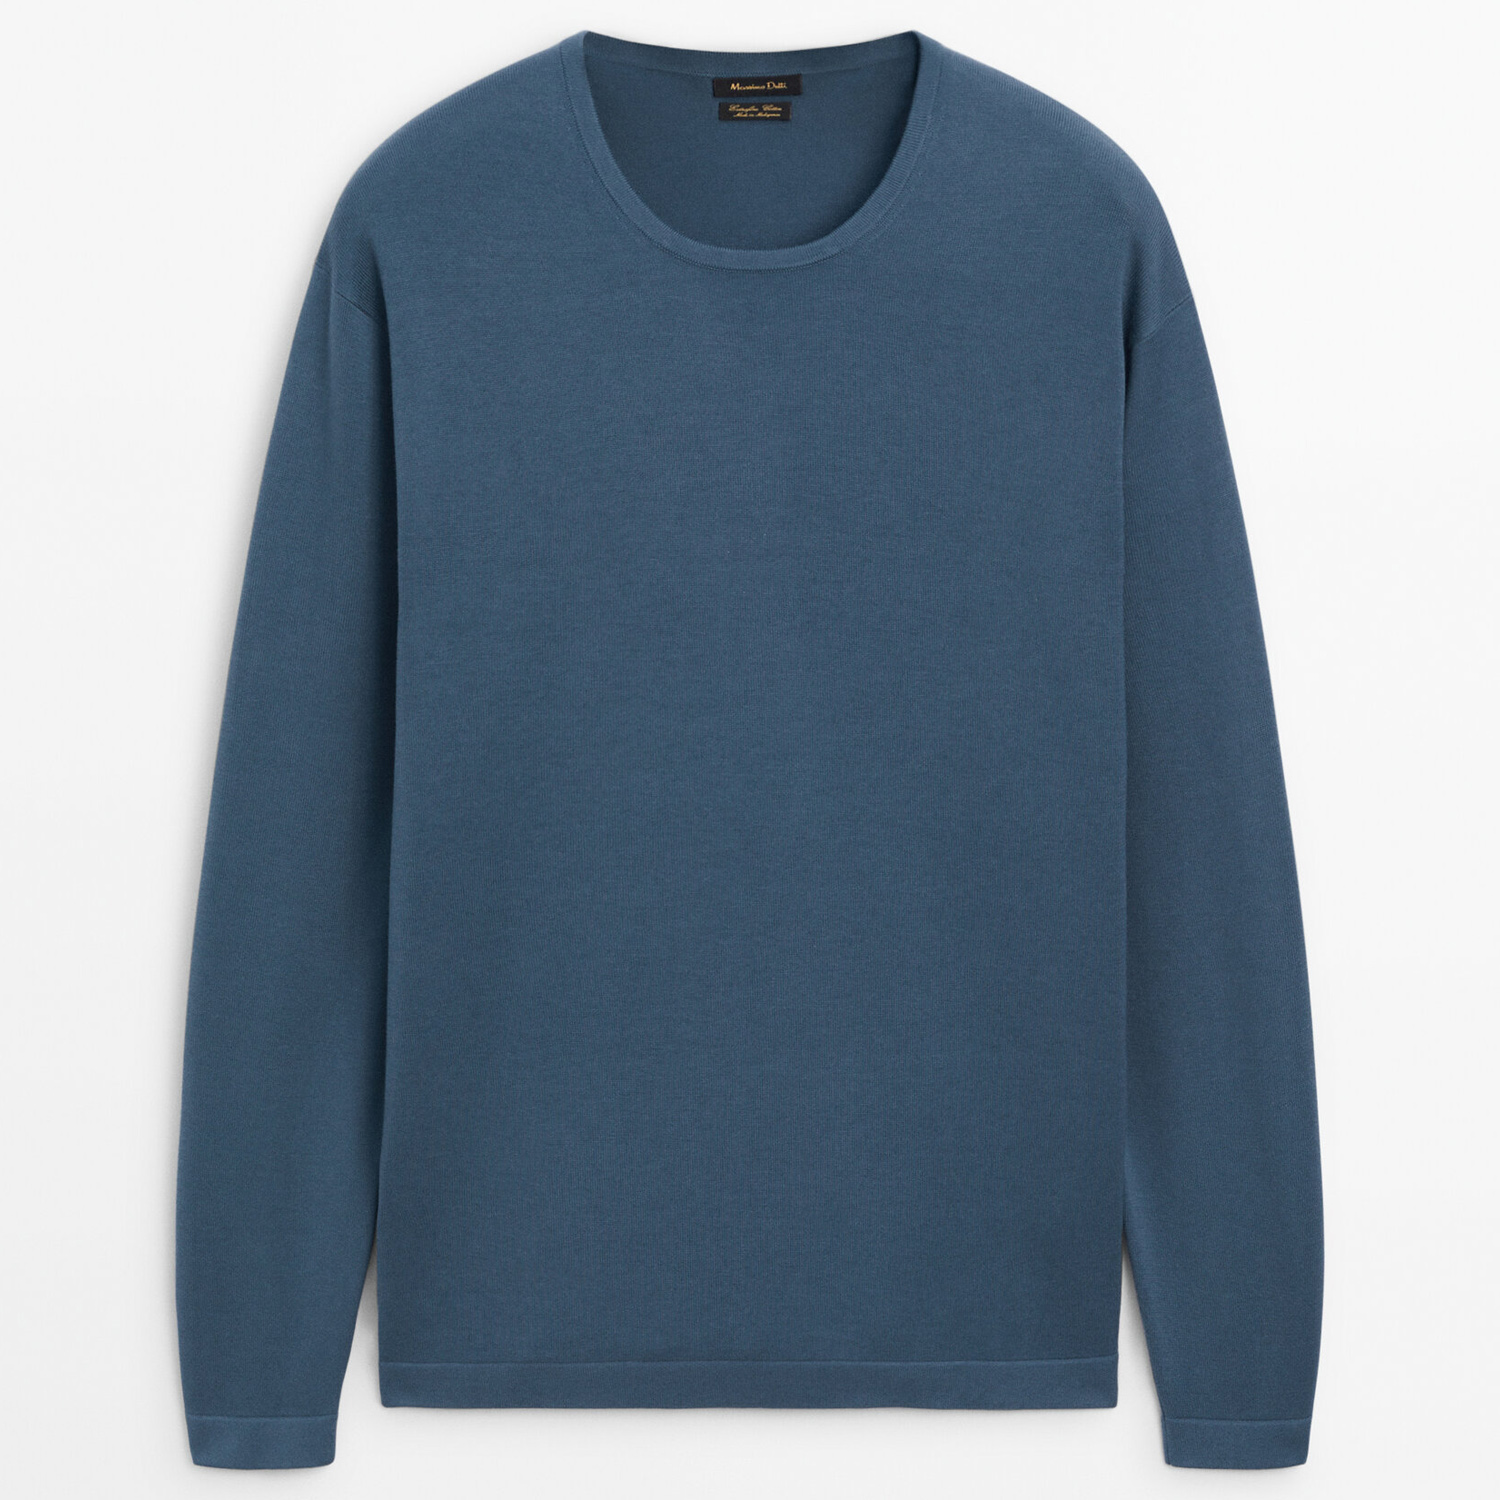 Свитер Massimo Dutti Crew Neck Knit, синий свитер massimo dutti crew neck knit кремовый